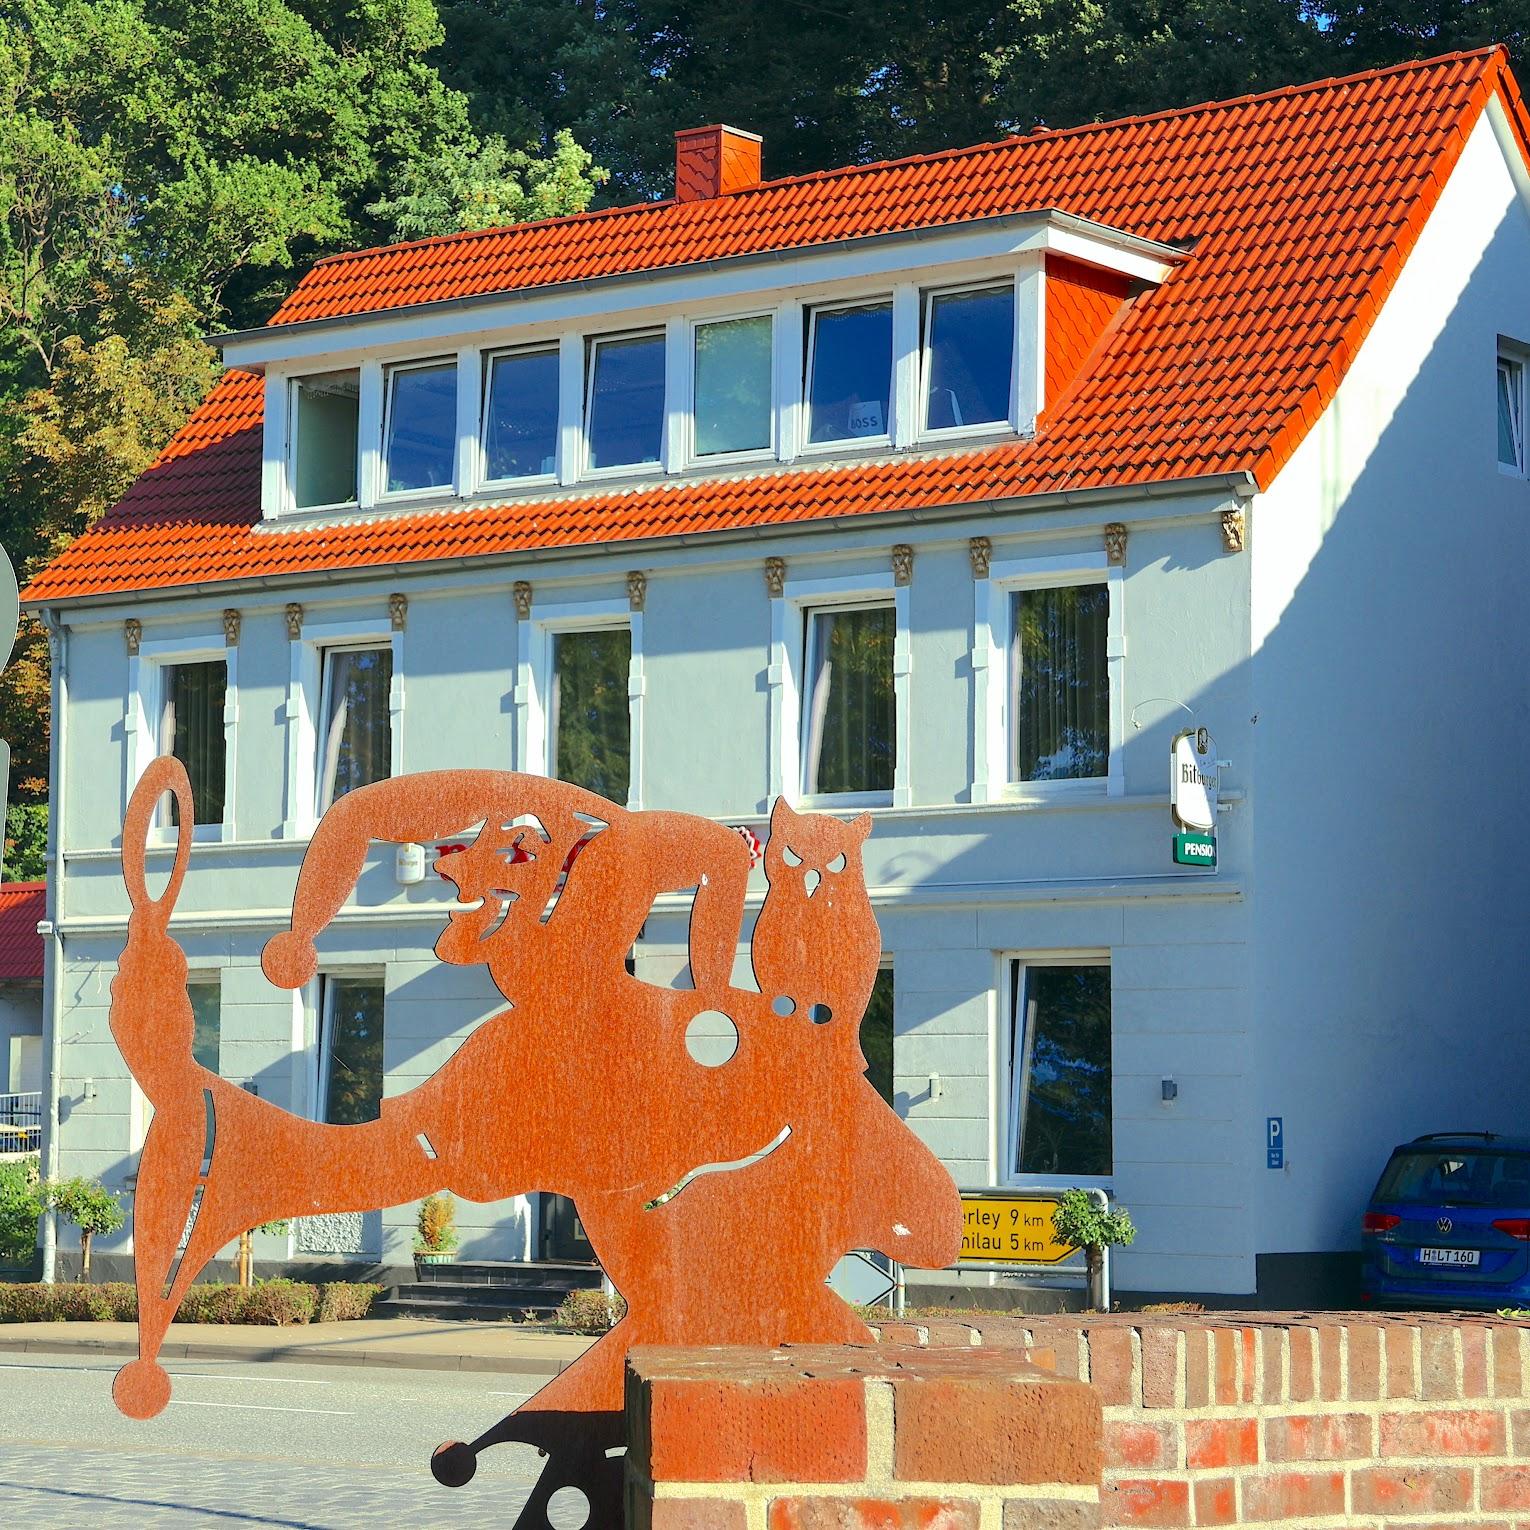 Restaurant "SeidenStrasse Pension and Restaurant" in Mölln